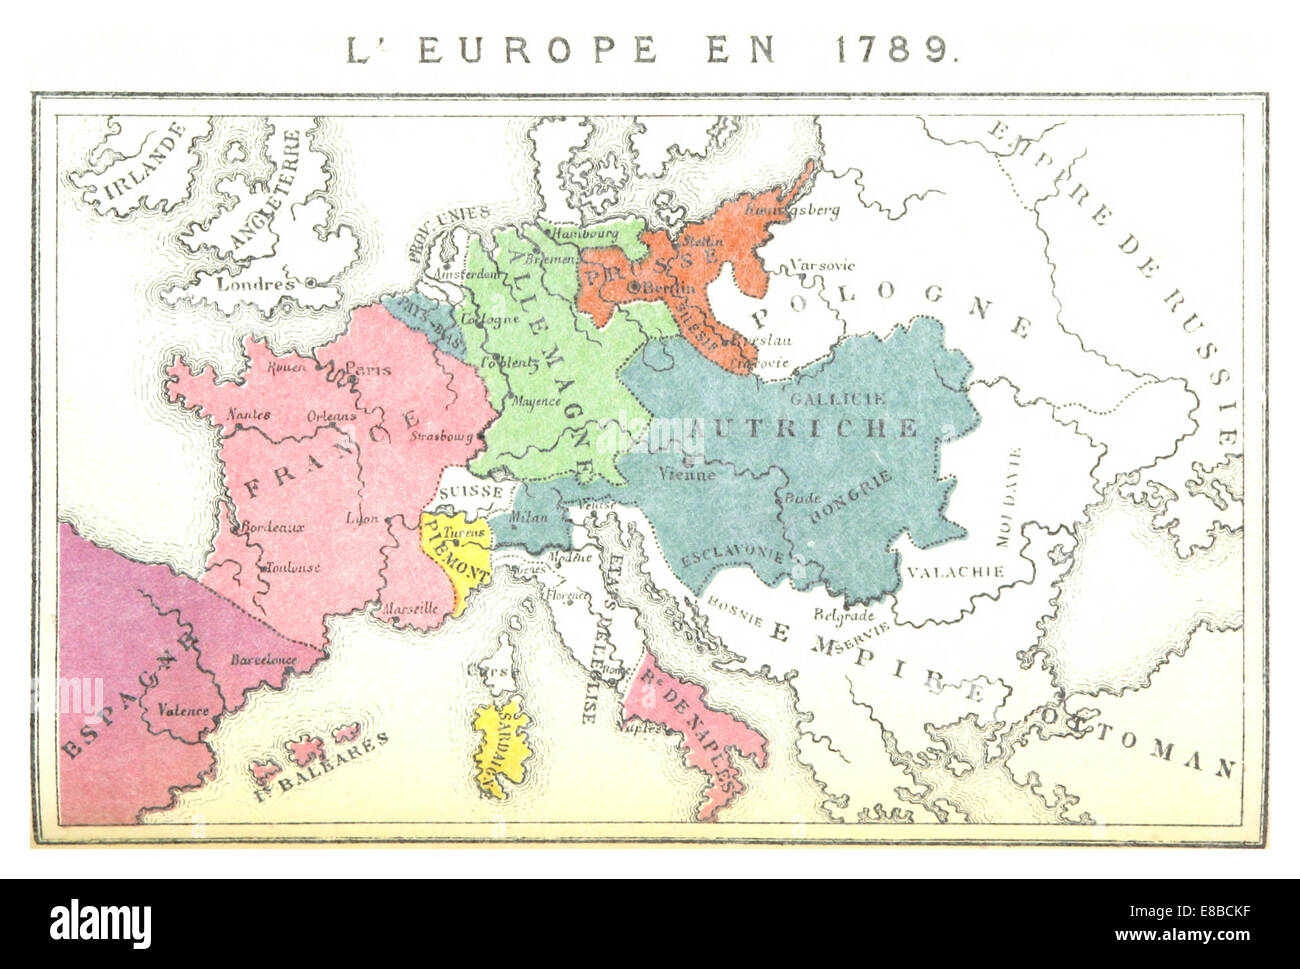 L' EUROPE EN 1789 Stock Photo